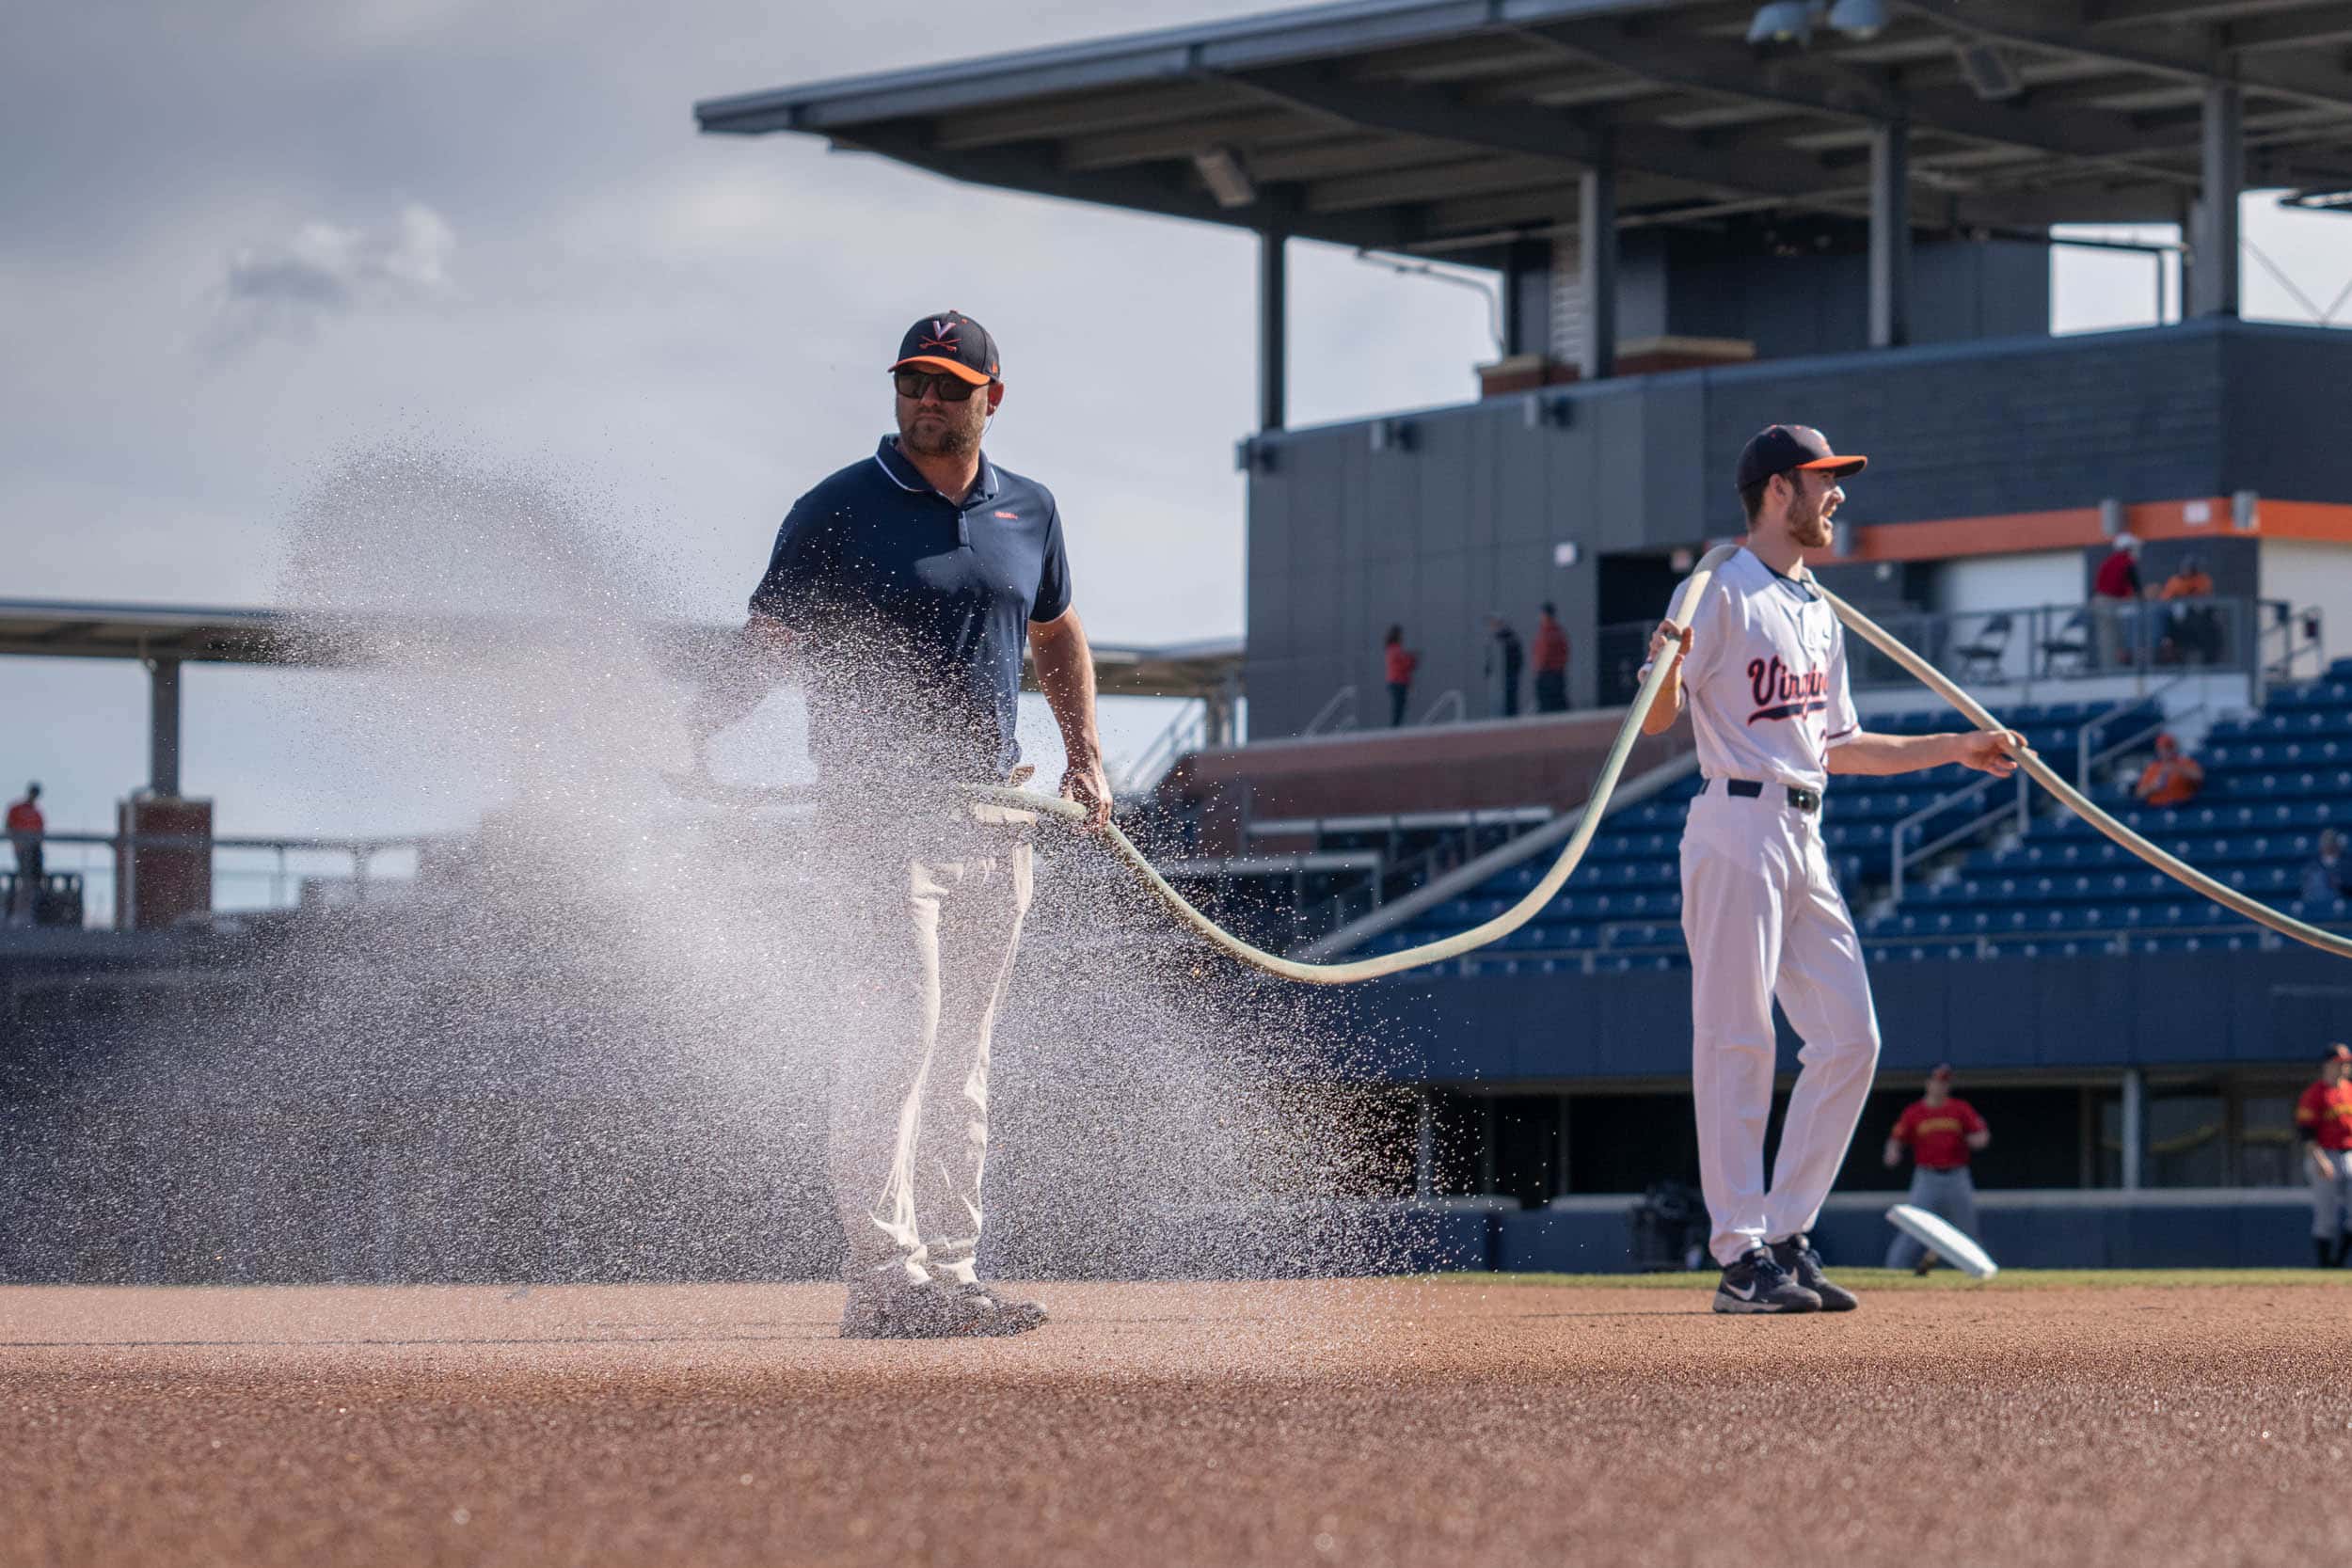 UVA staff member and baseball player watering the baseball field